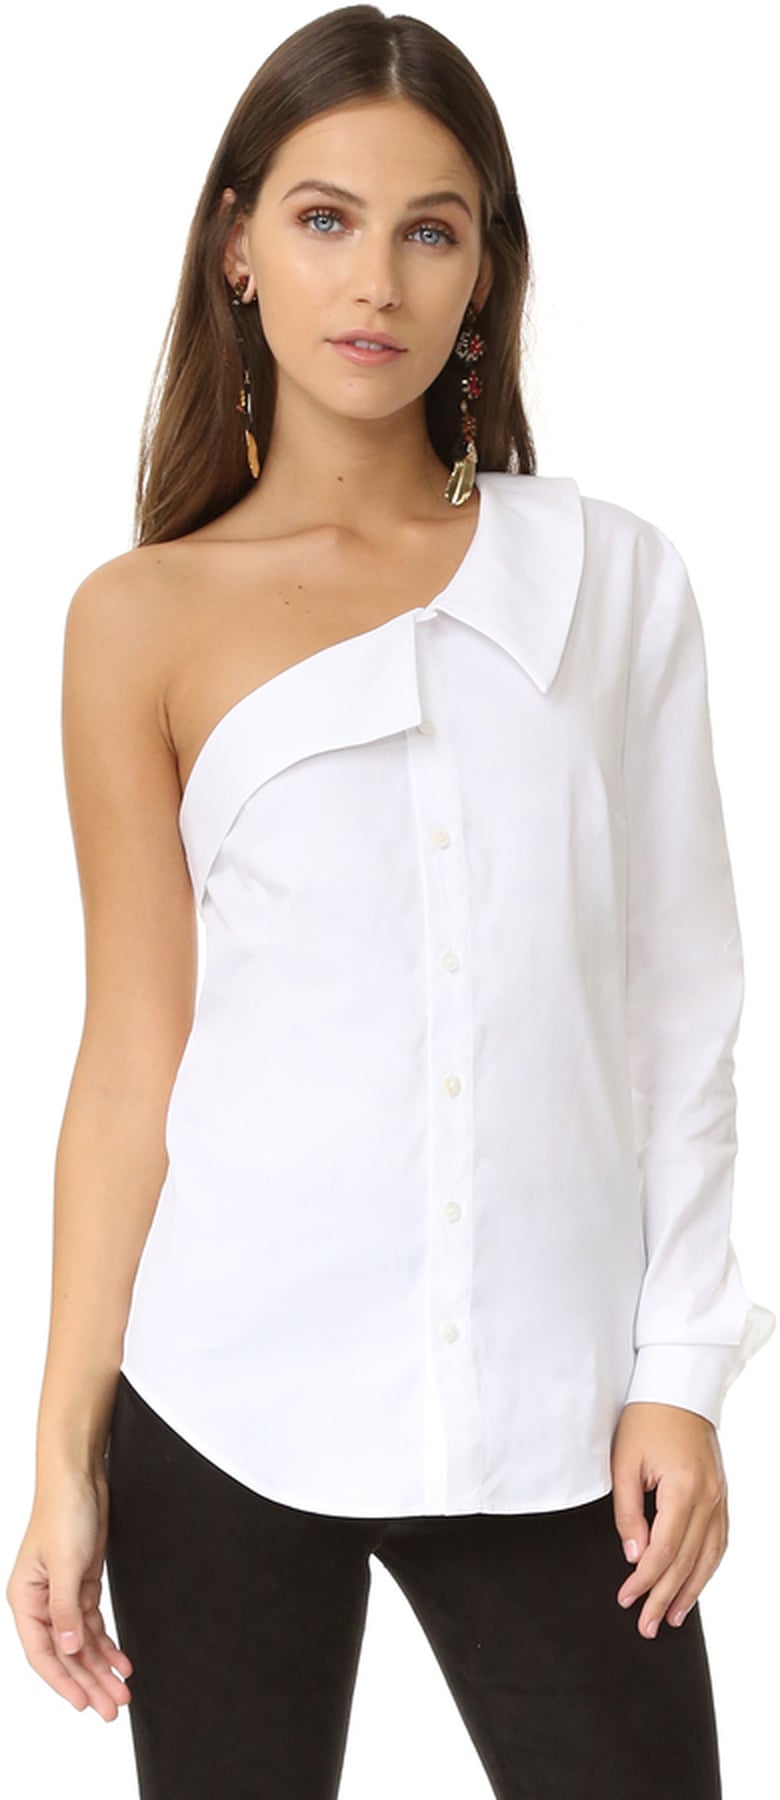 Unique White Button-Down Shirts | POPSUGAR Fashion